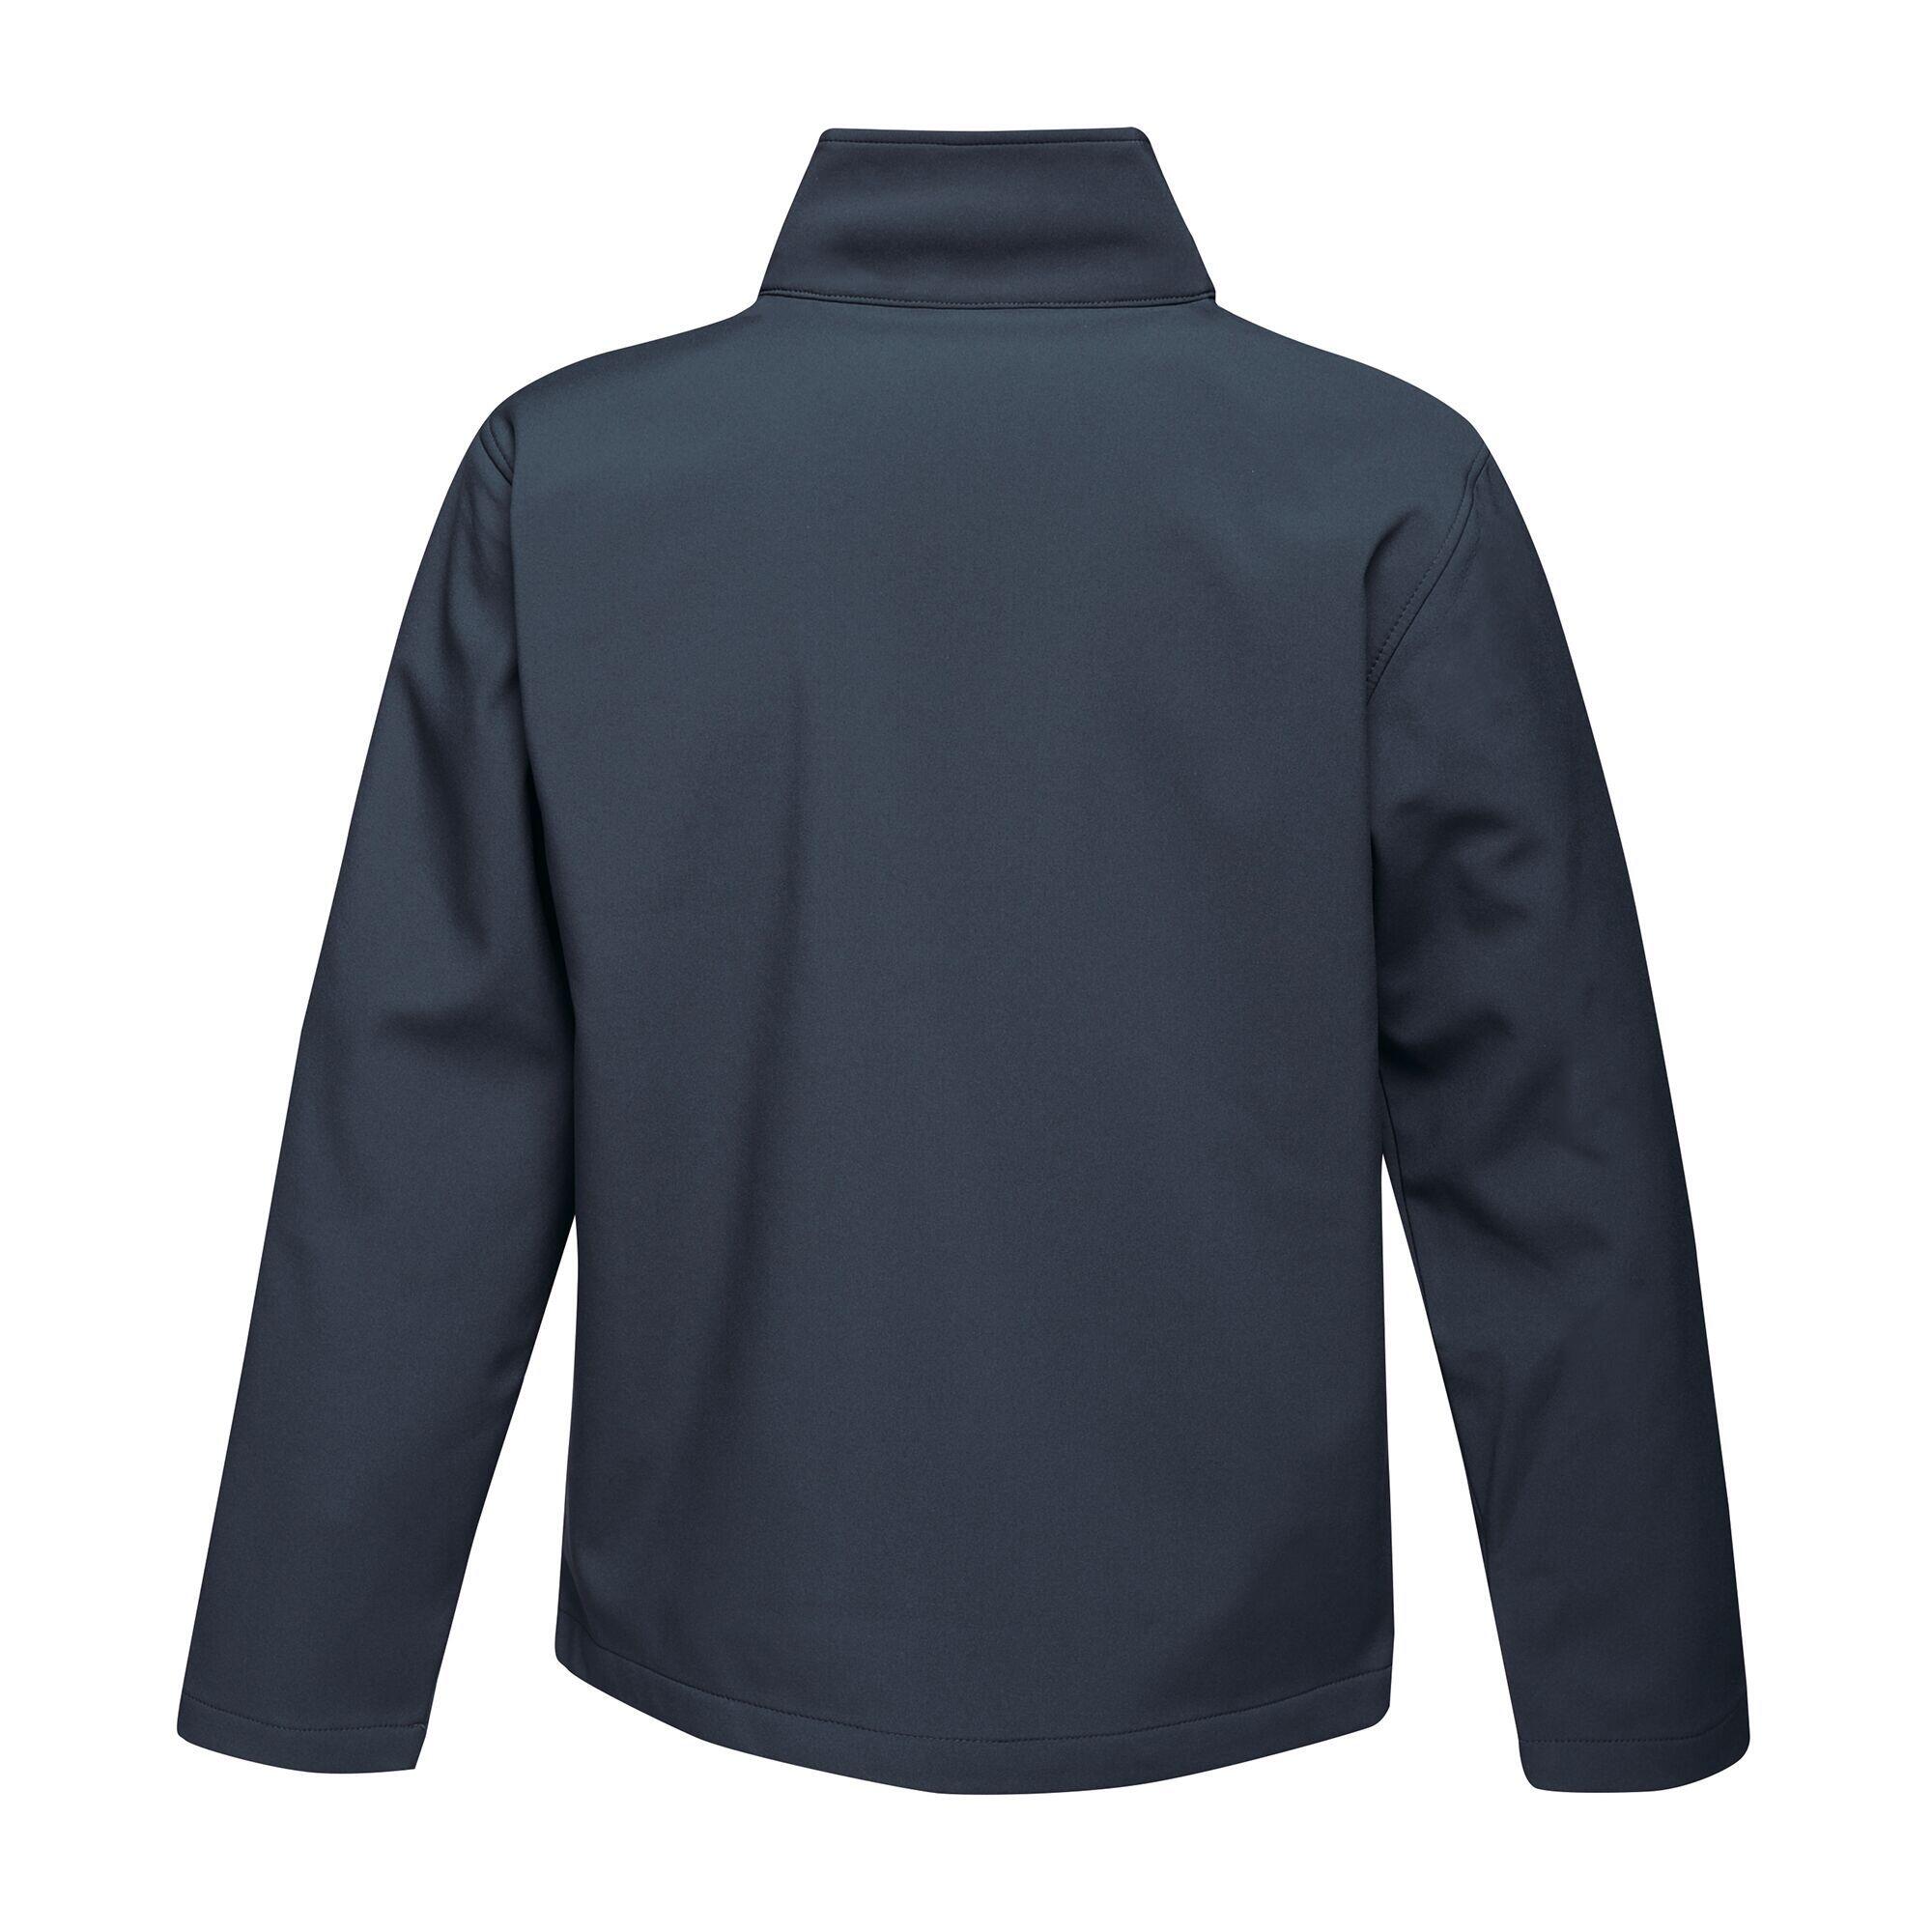 Standout Mens Ablaze Printable Soft Shell Jacket (Navy/Navy) 2/5